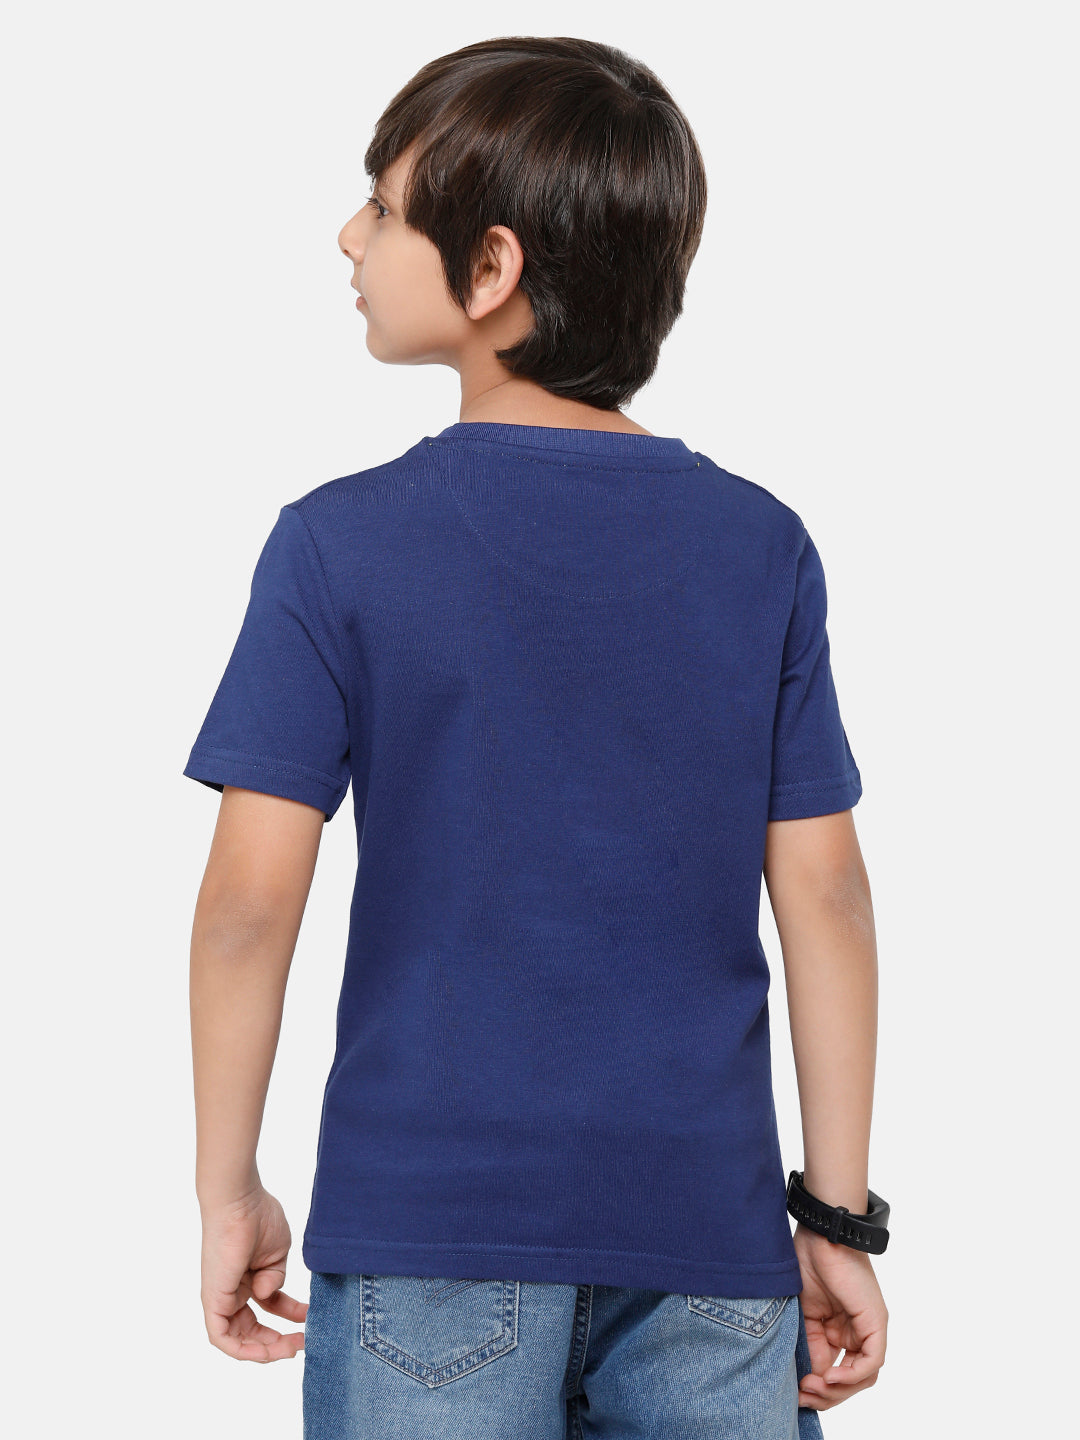 CP Boys Blue Printed Slim Fit Round Neck T-Shirt T-shirt Classic Polo 